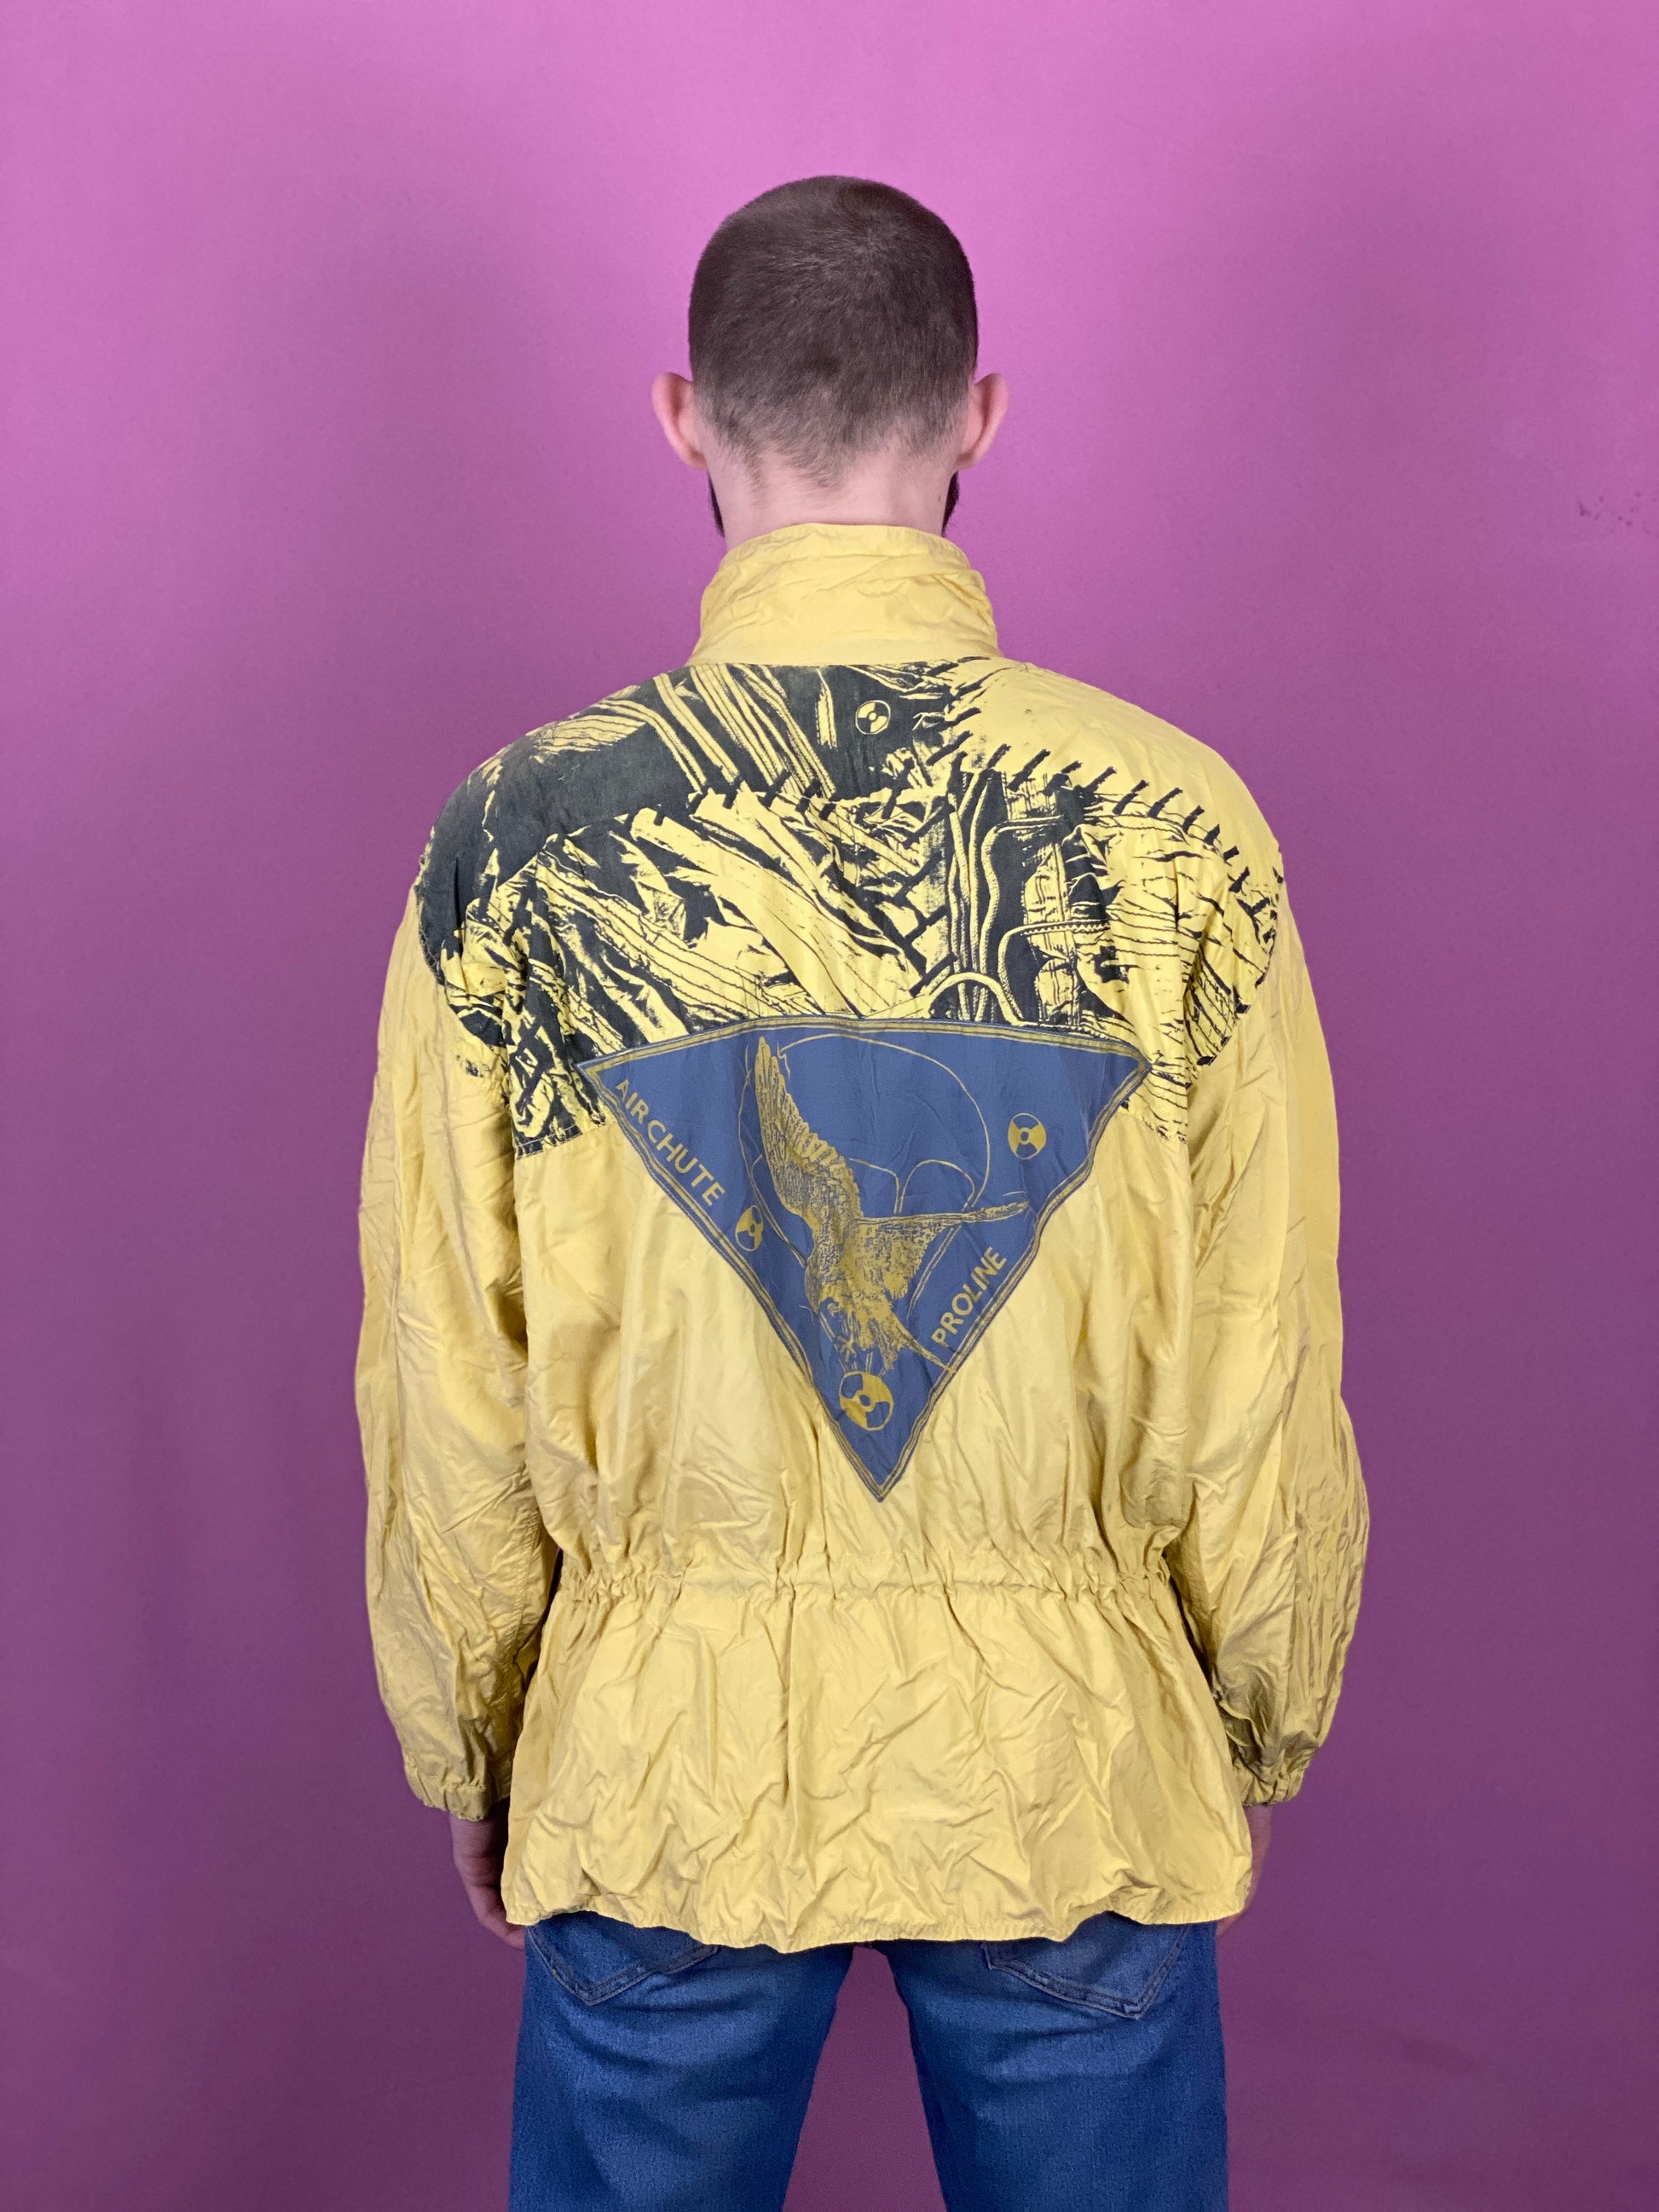 90s Vintage Men's Windbreaker Jacket - Large Yellow Nylon